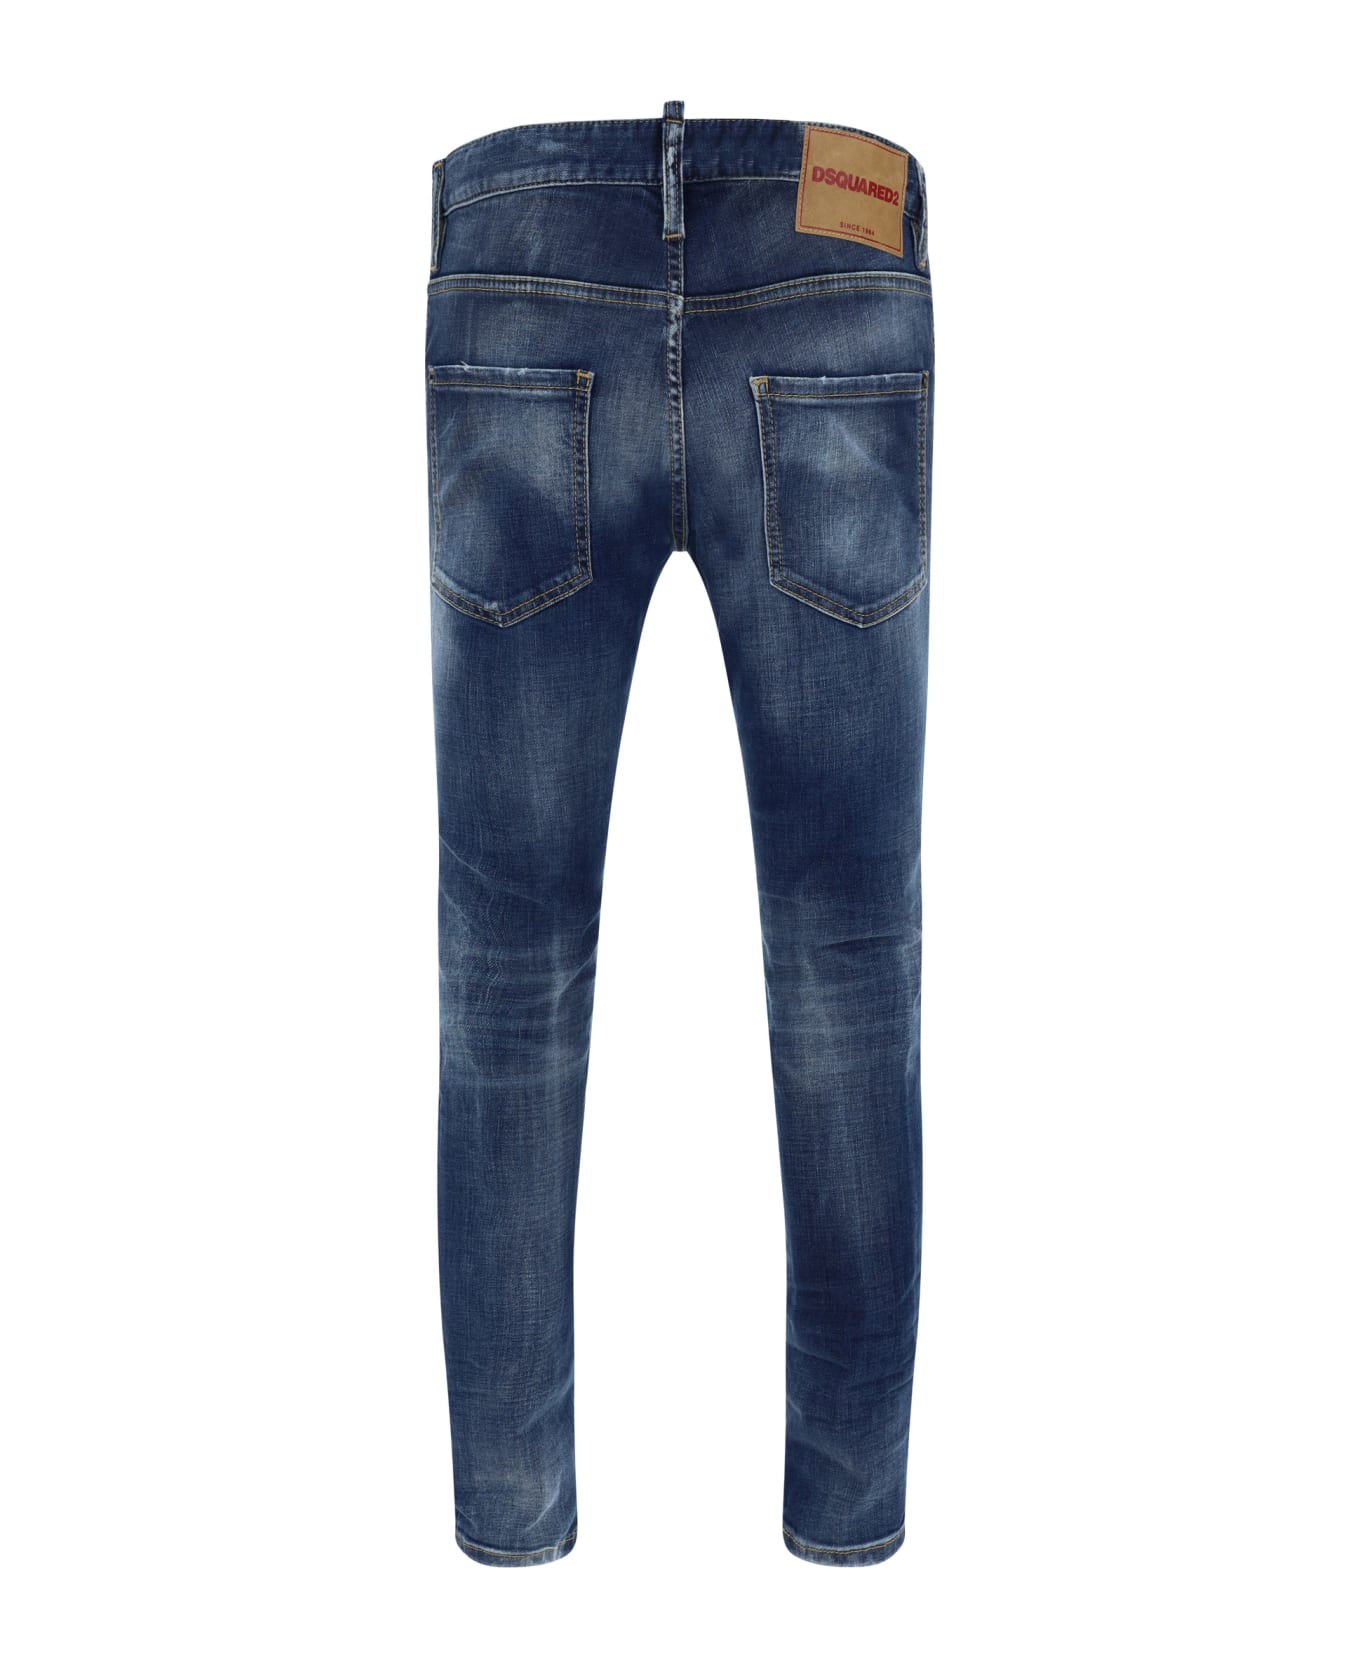 Dsquared2 Cool Guy Jeans - Denim